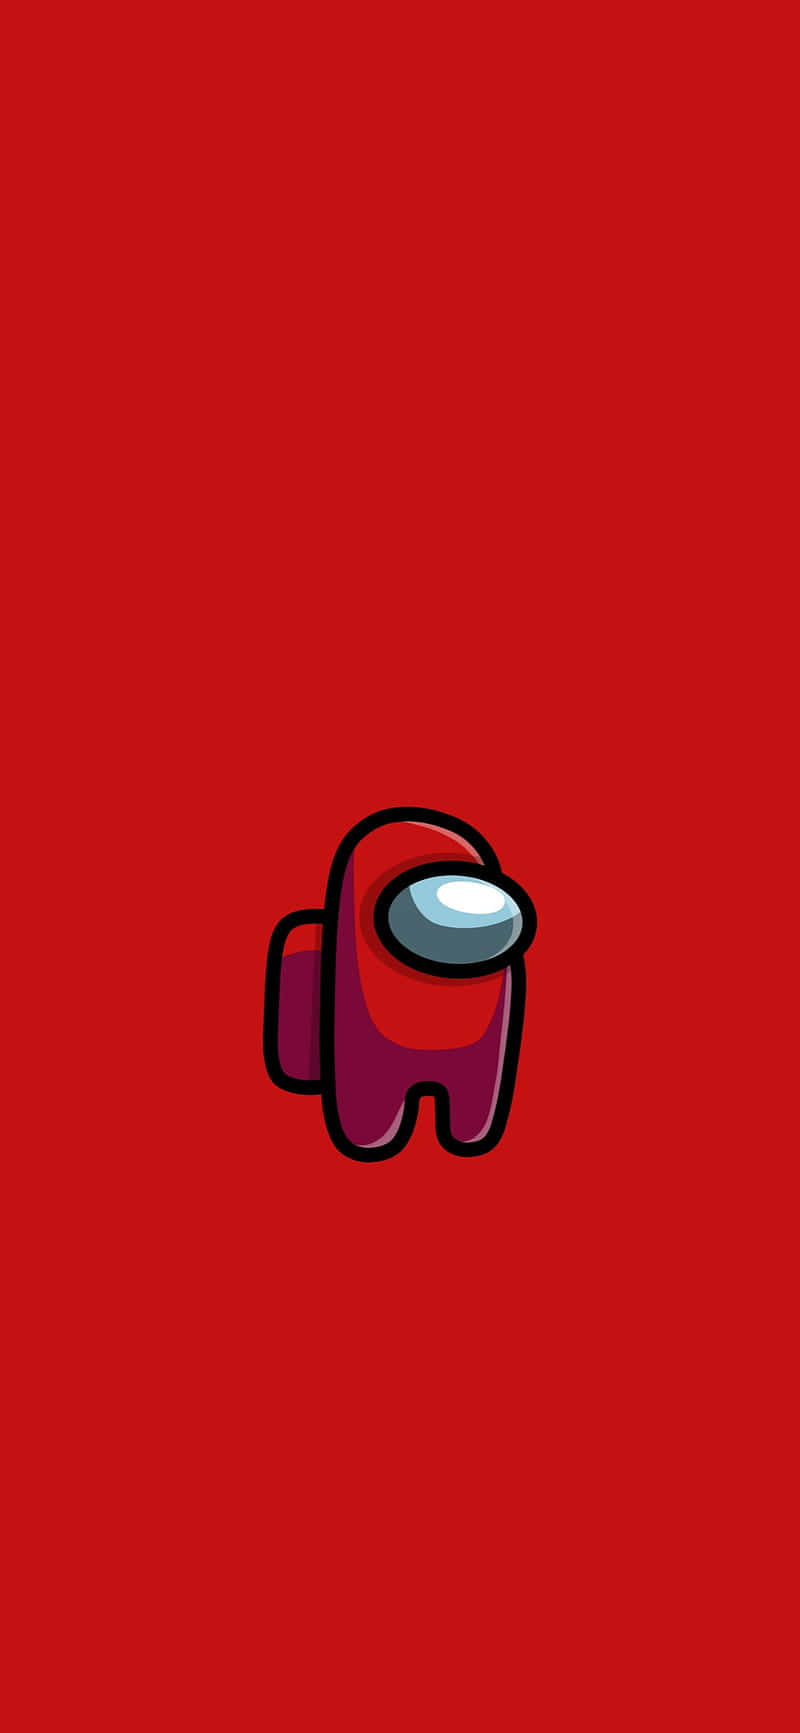 Unfondo Rojo Con Un Robot Rojo Fondo de pantalla